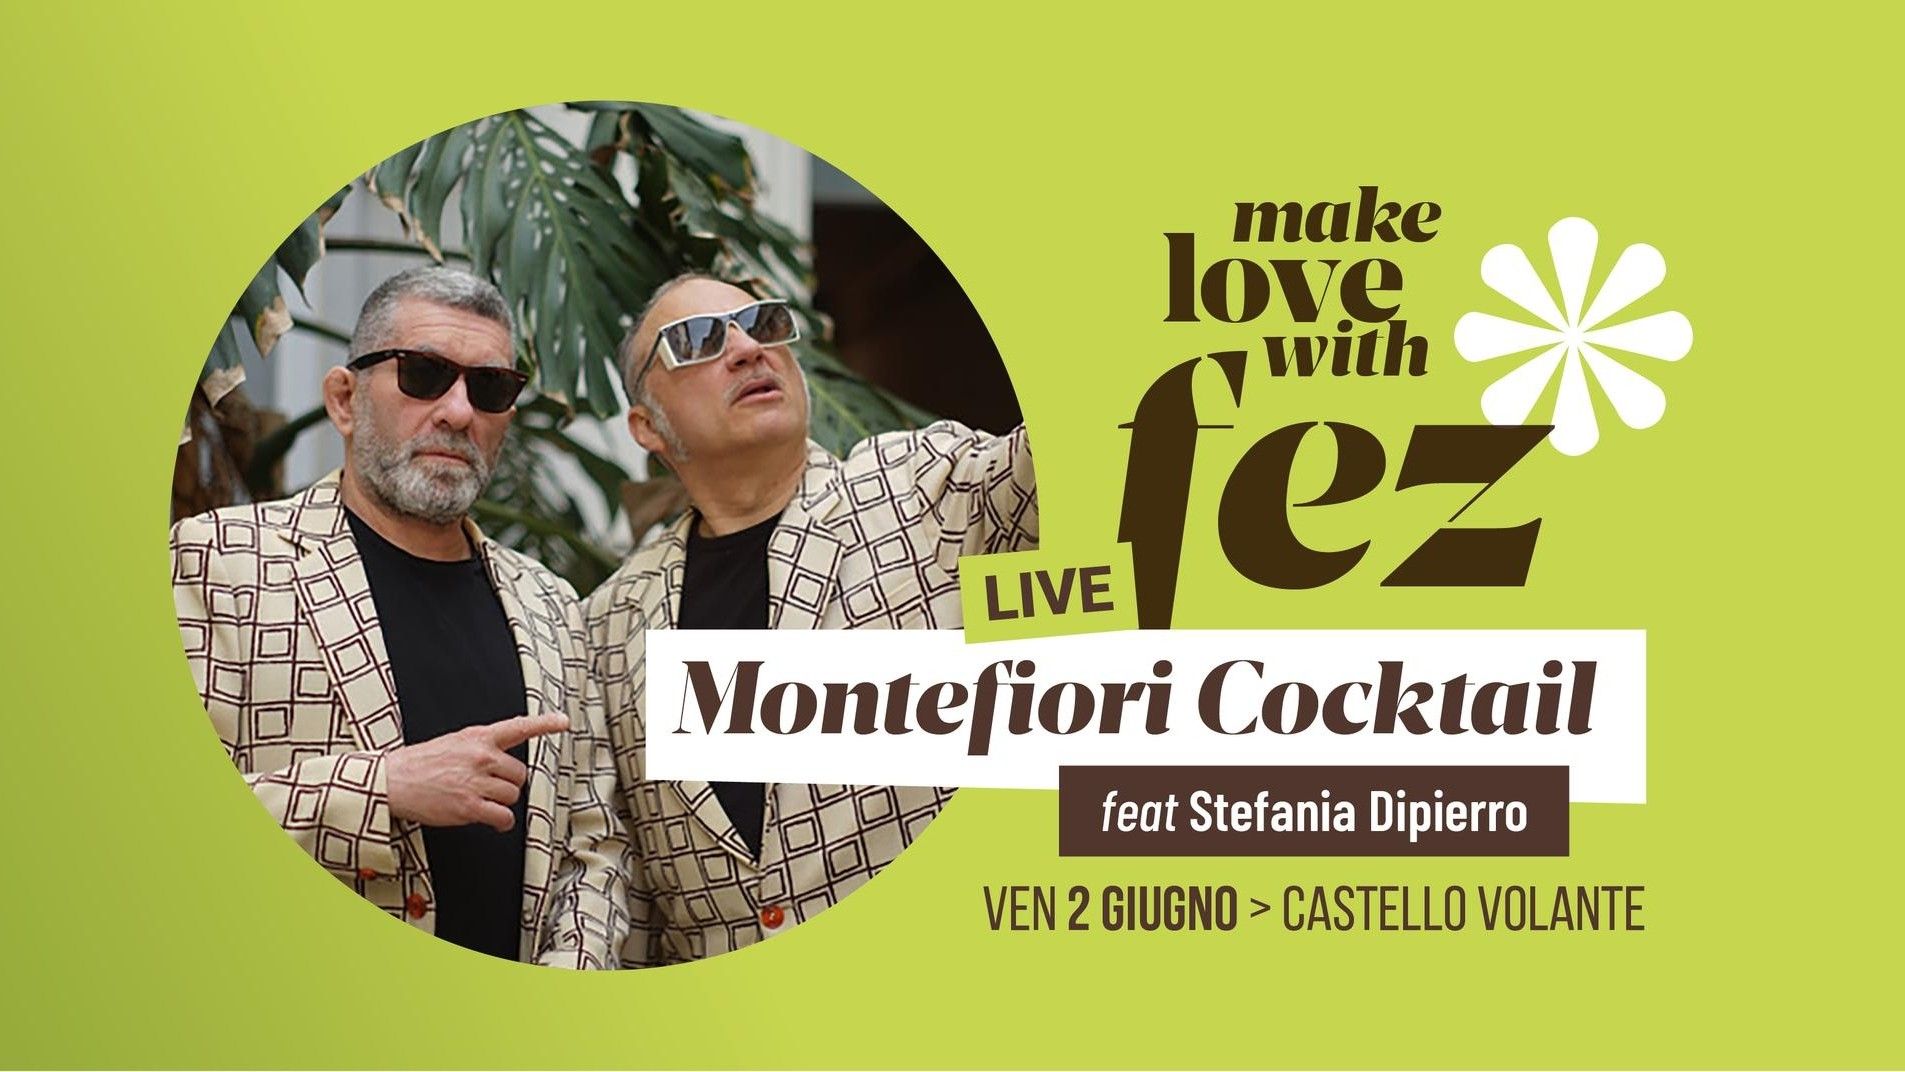 Make Love with Fez + Montefiori Cocktail